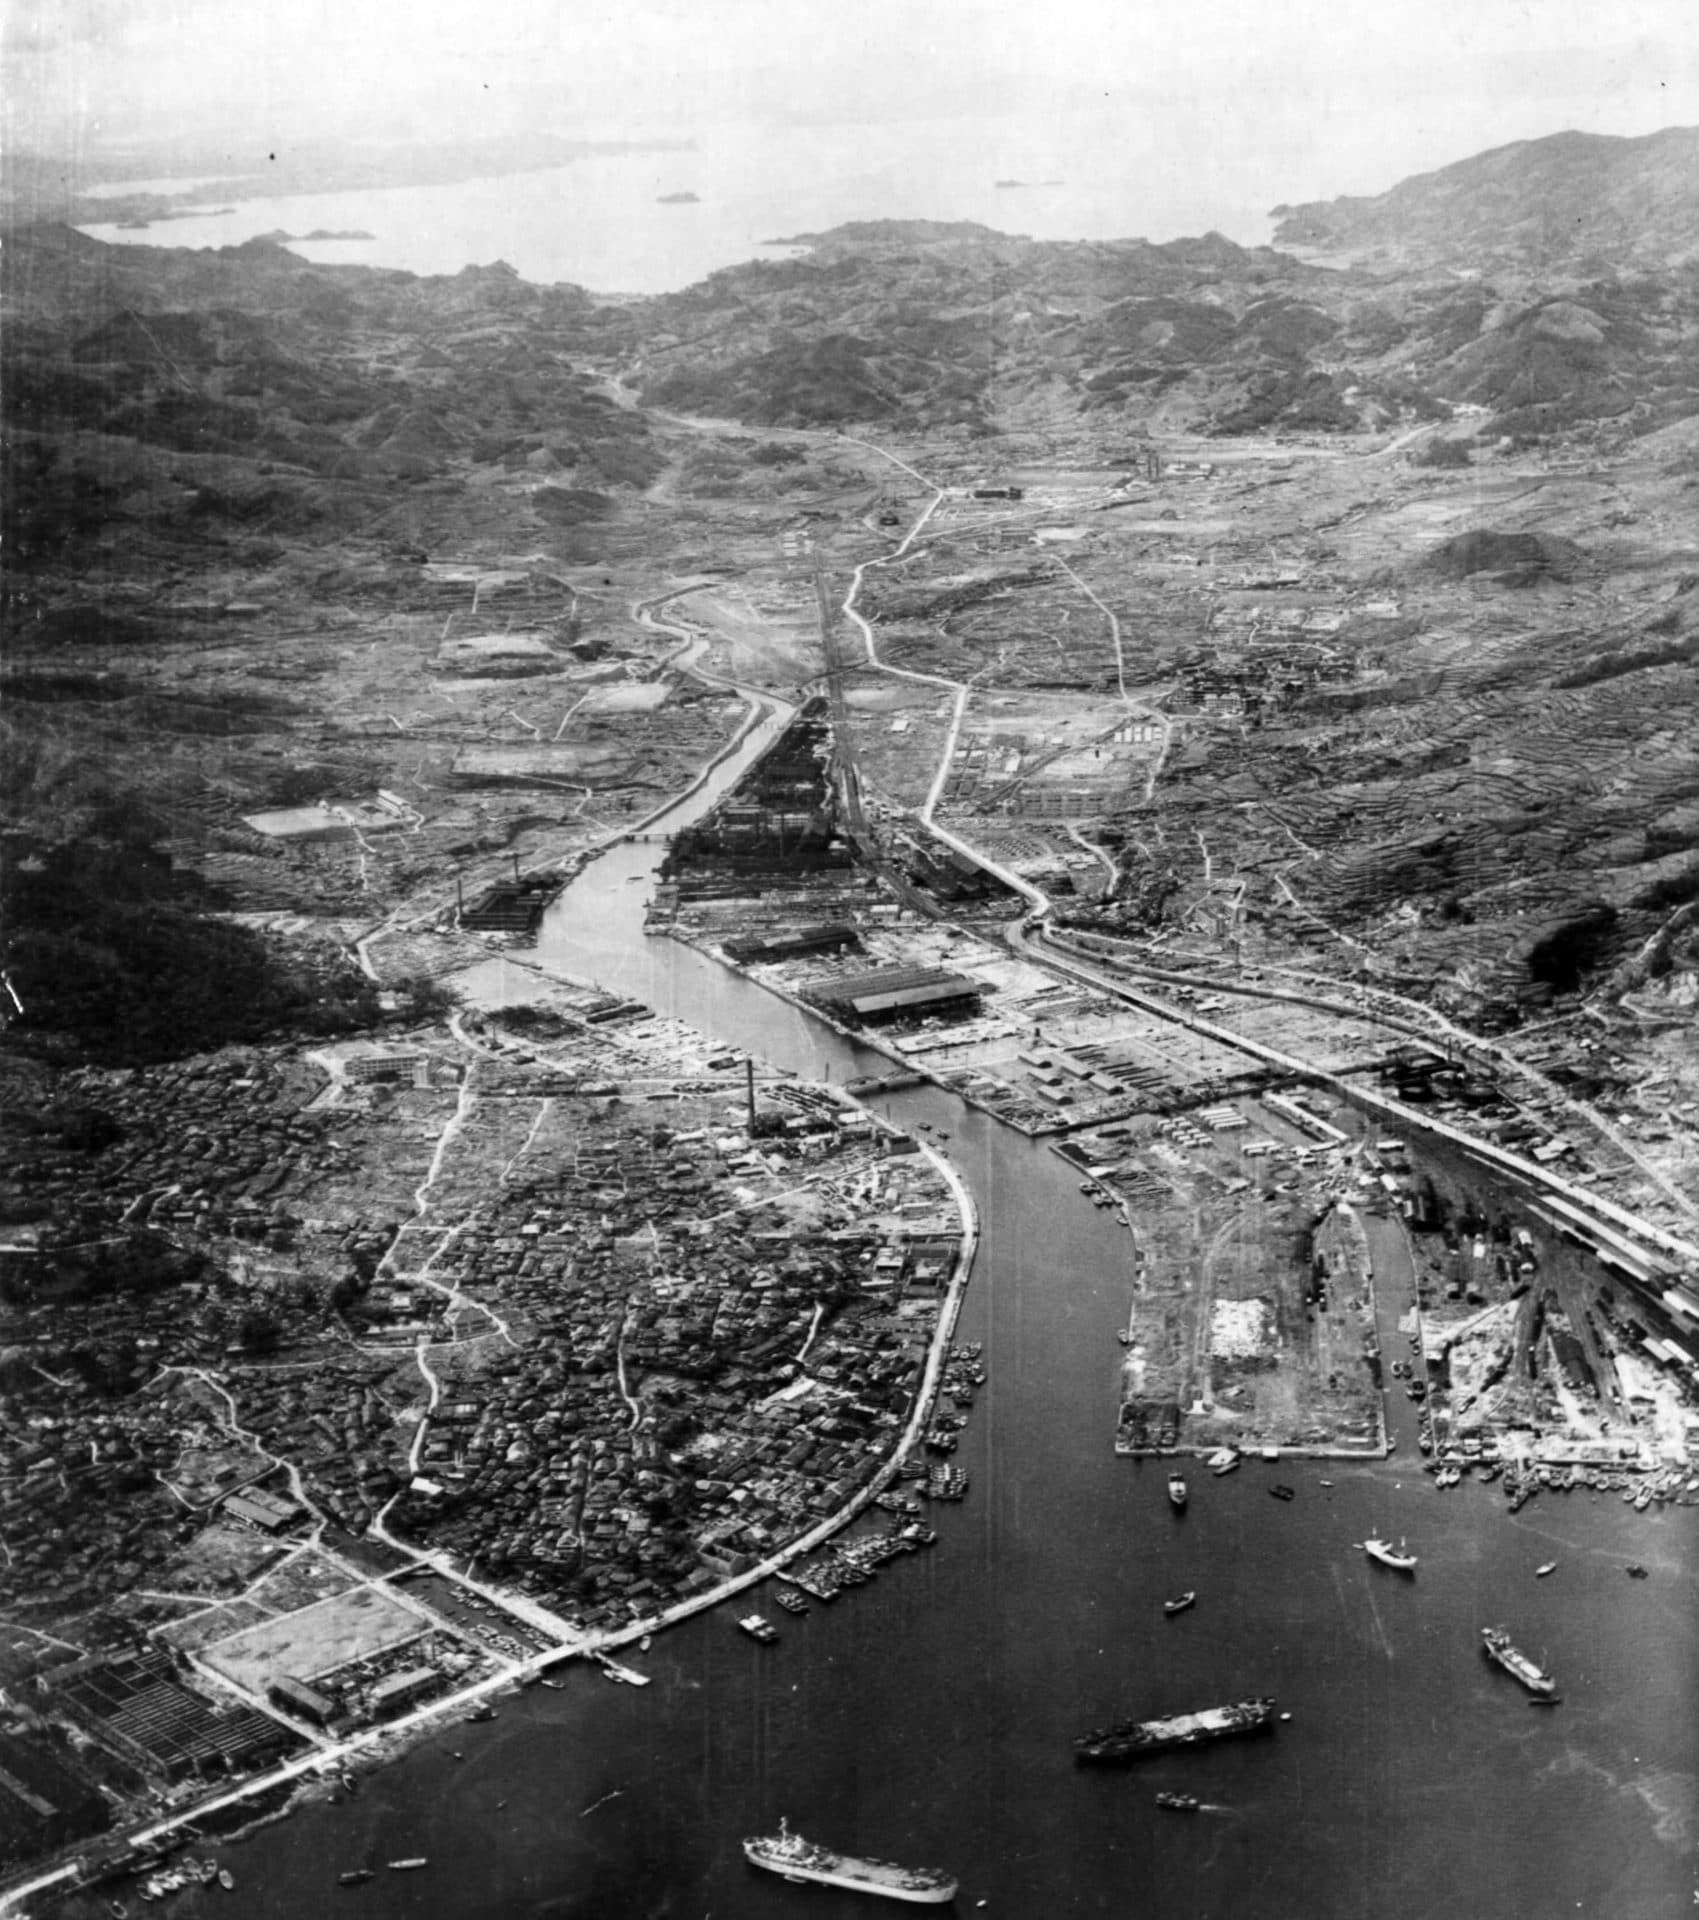 urakami valley nagasaki after atomic bomb 1945